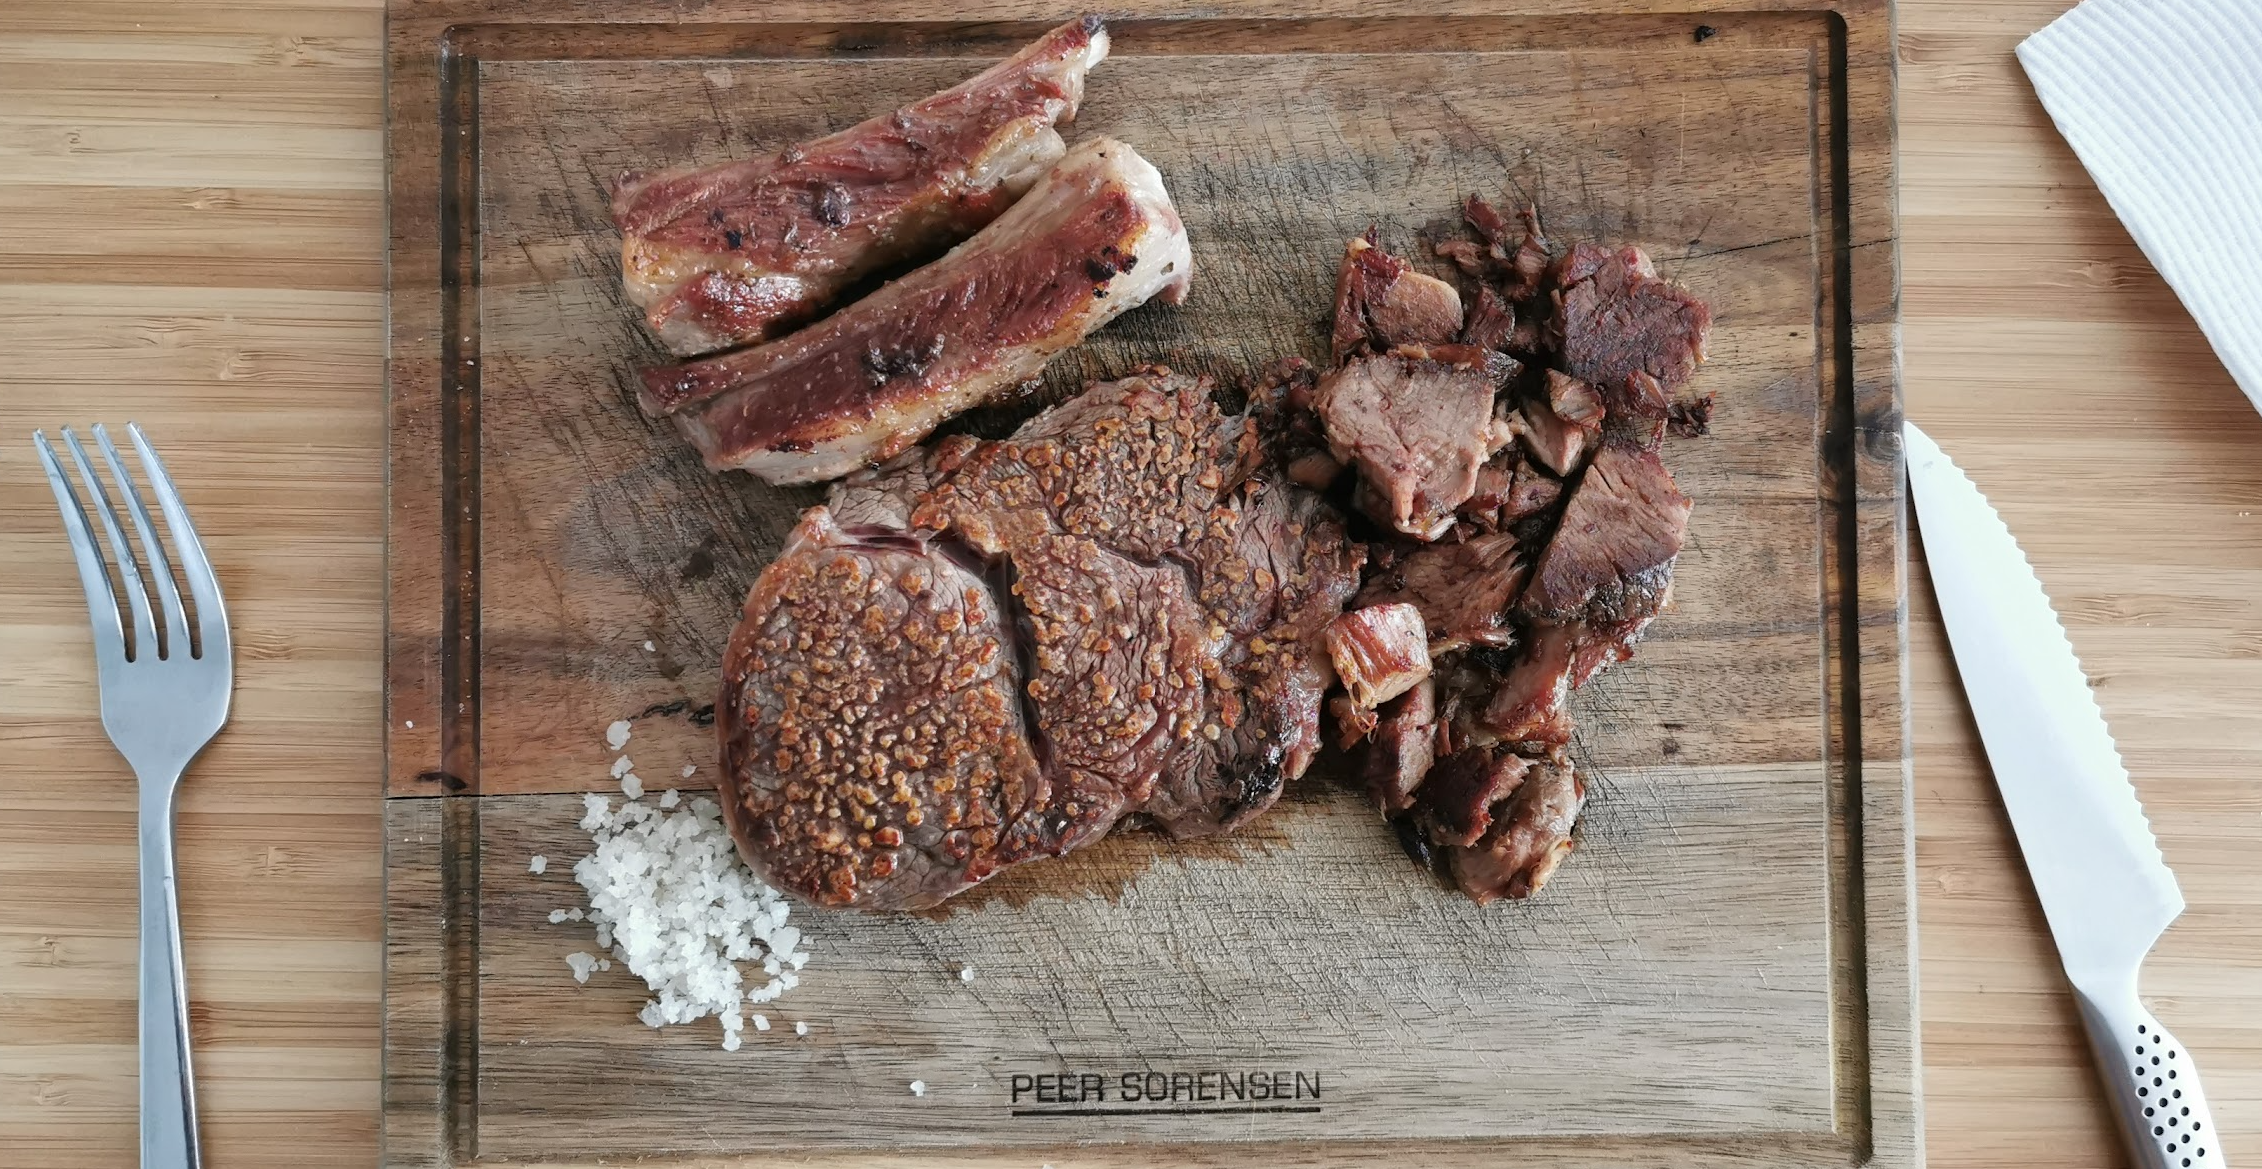 Steak and Lamb Ribs on Wood plate